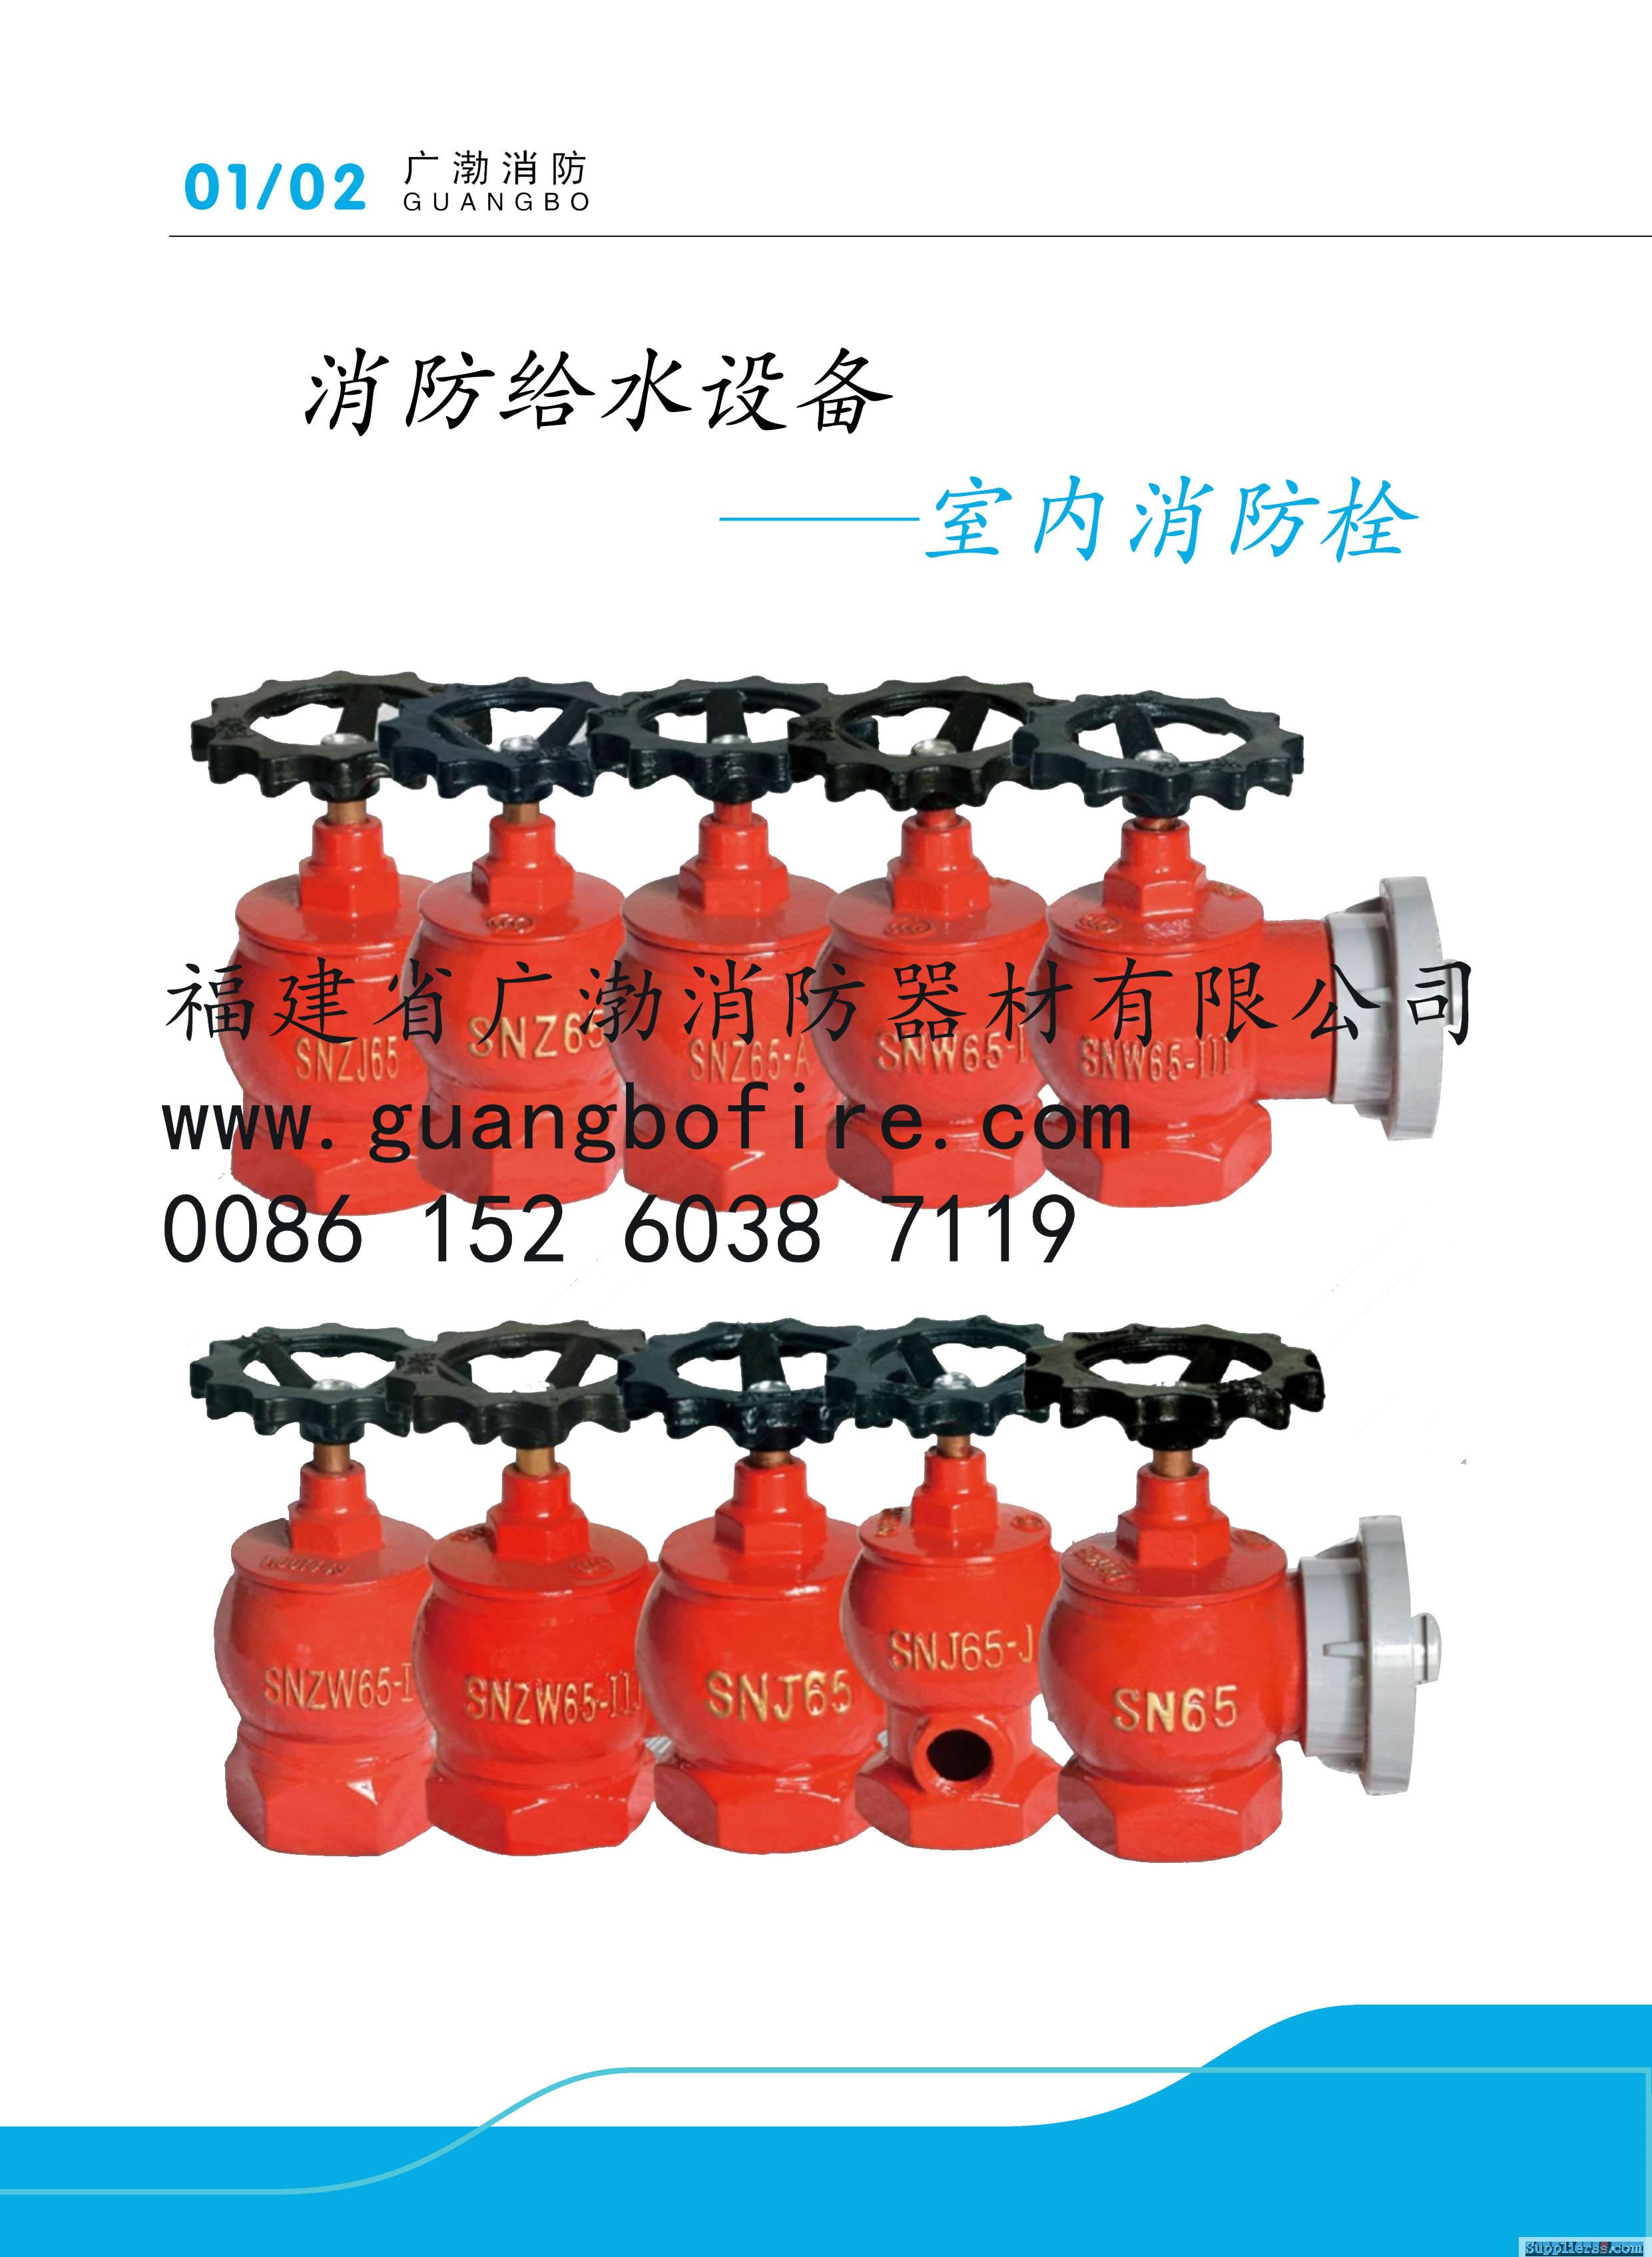 Firefighting Equipment Accessories Fujian Guangbo Brand